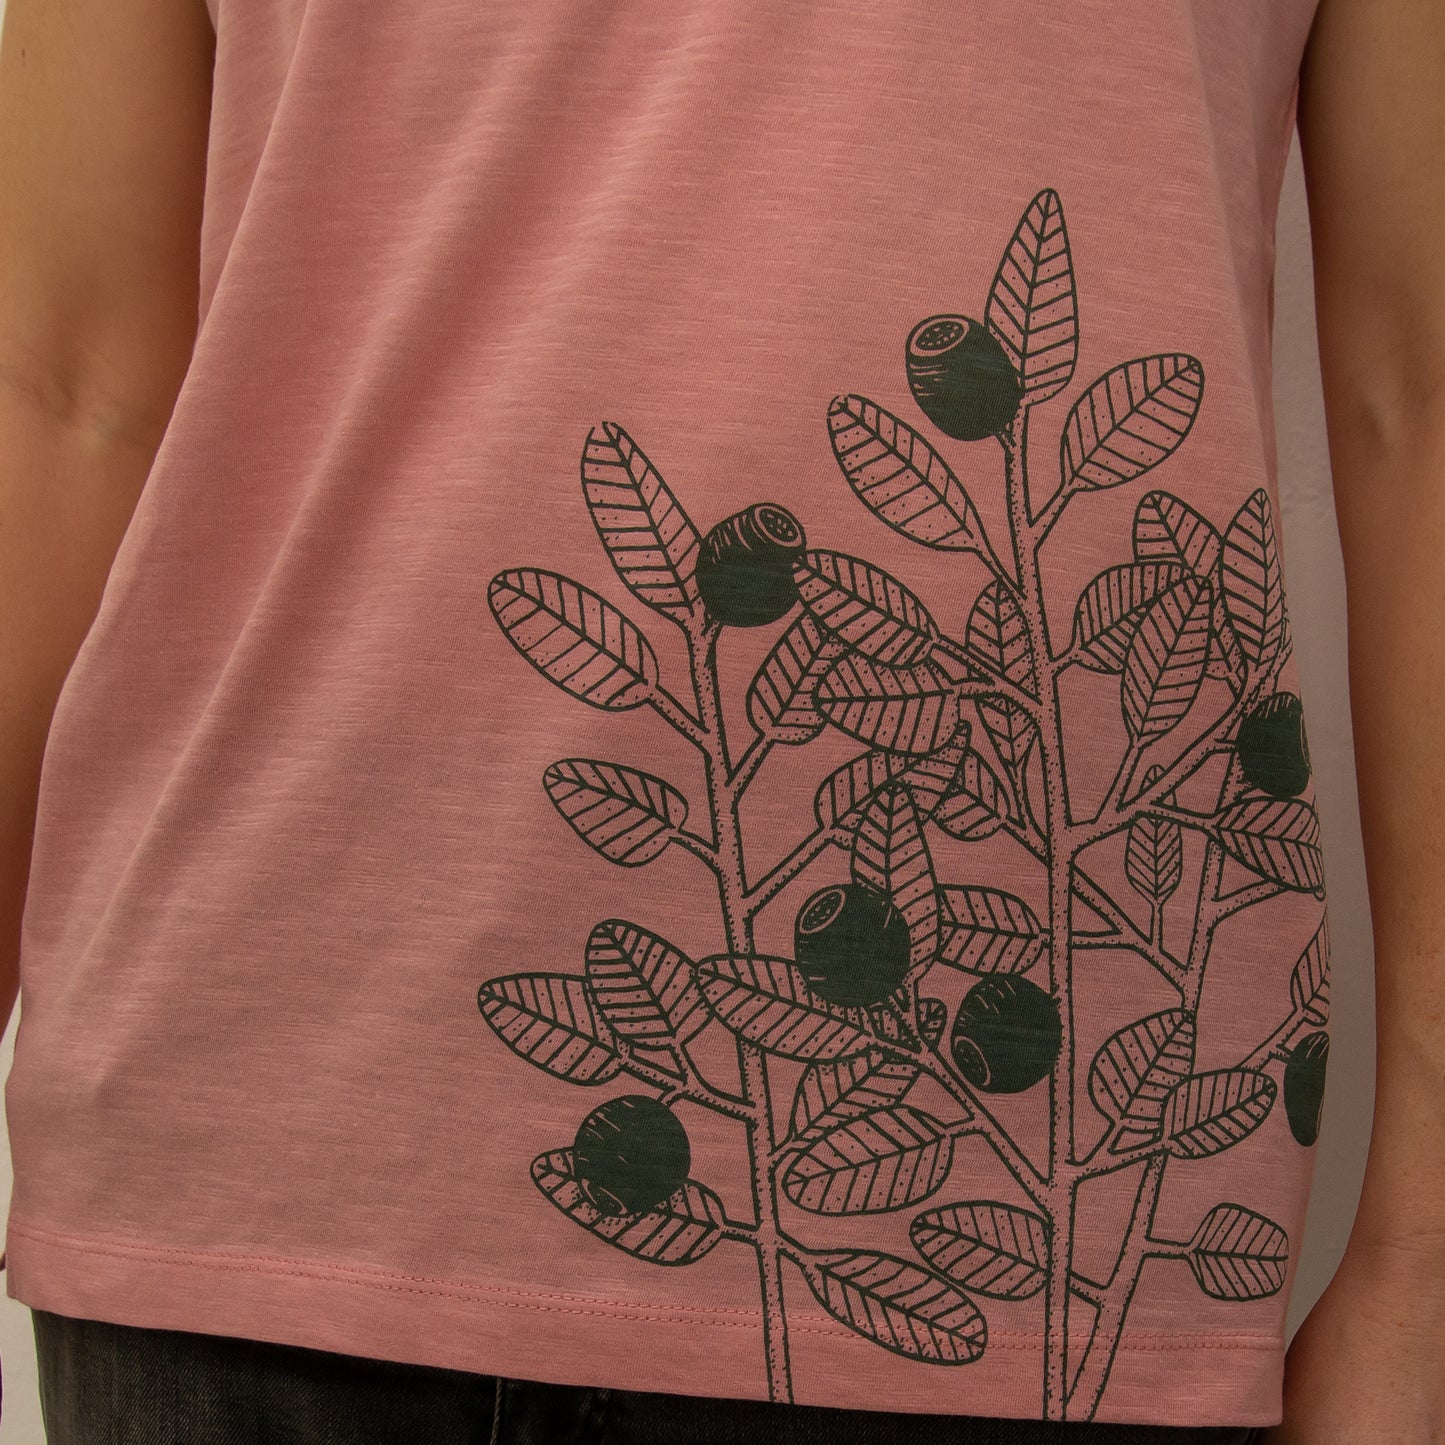 Kleinserie Blaubeer T-Shirt in canyon pink XL